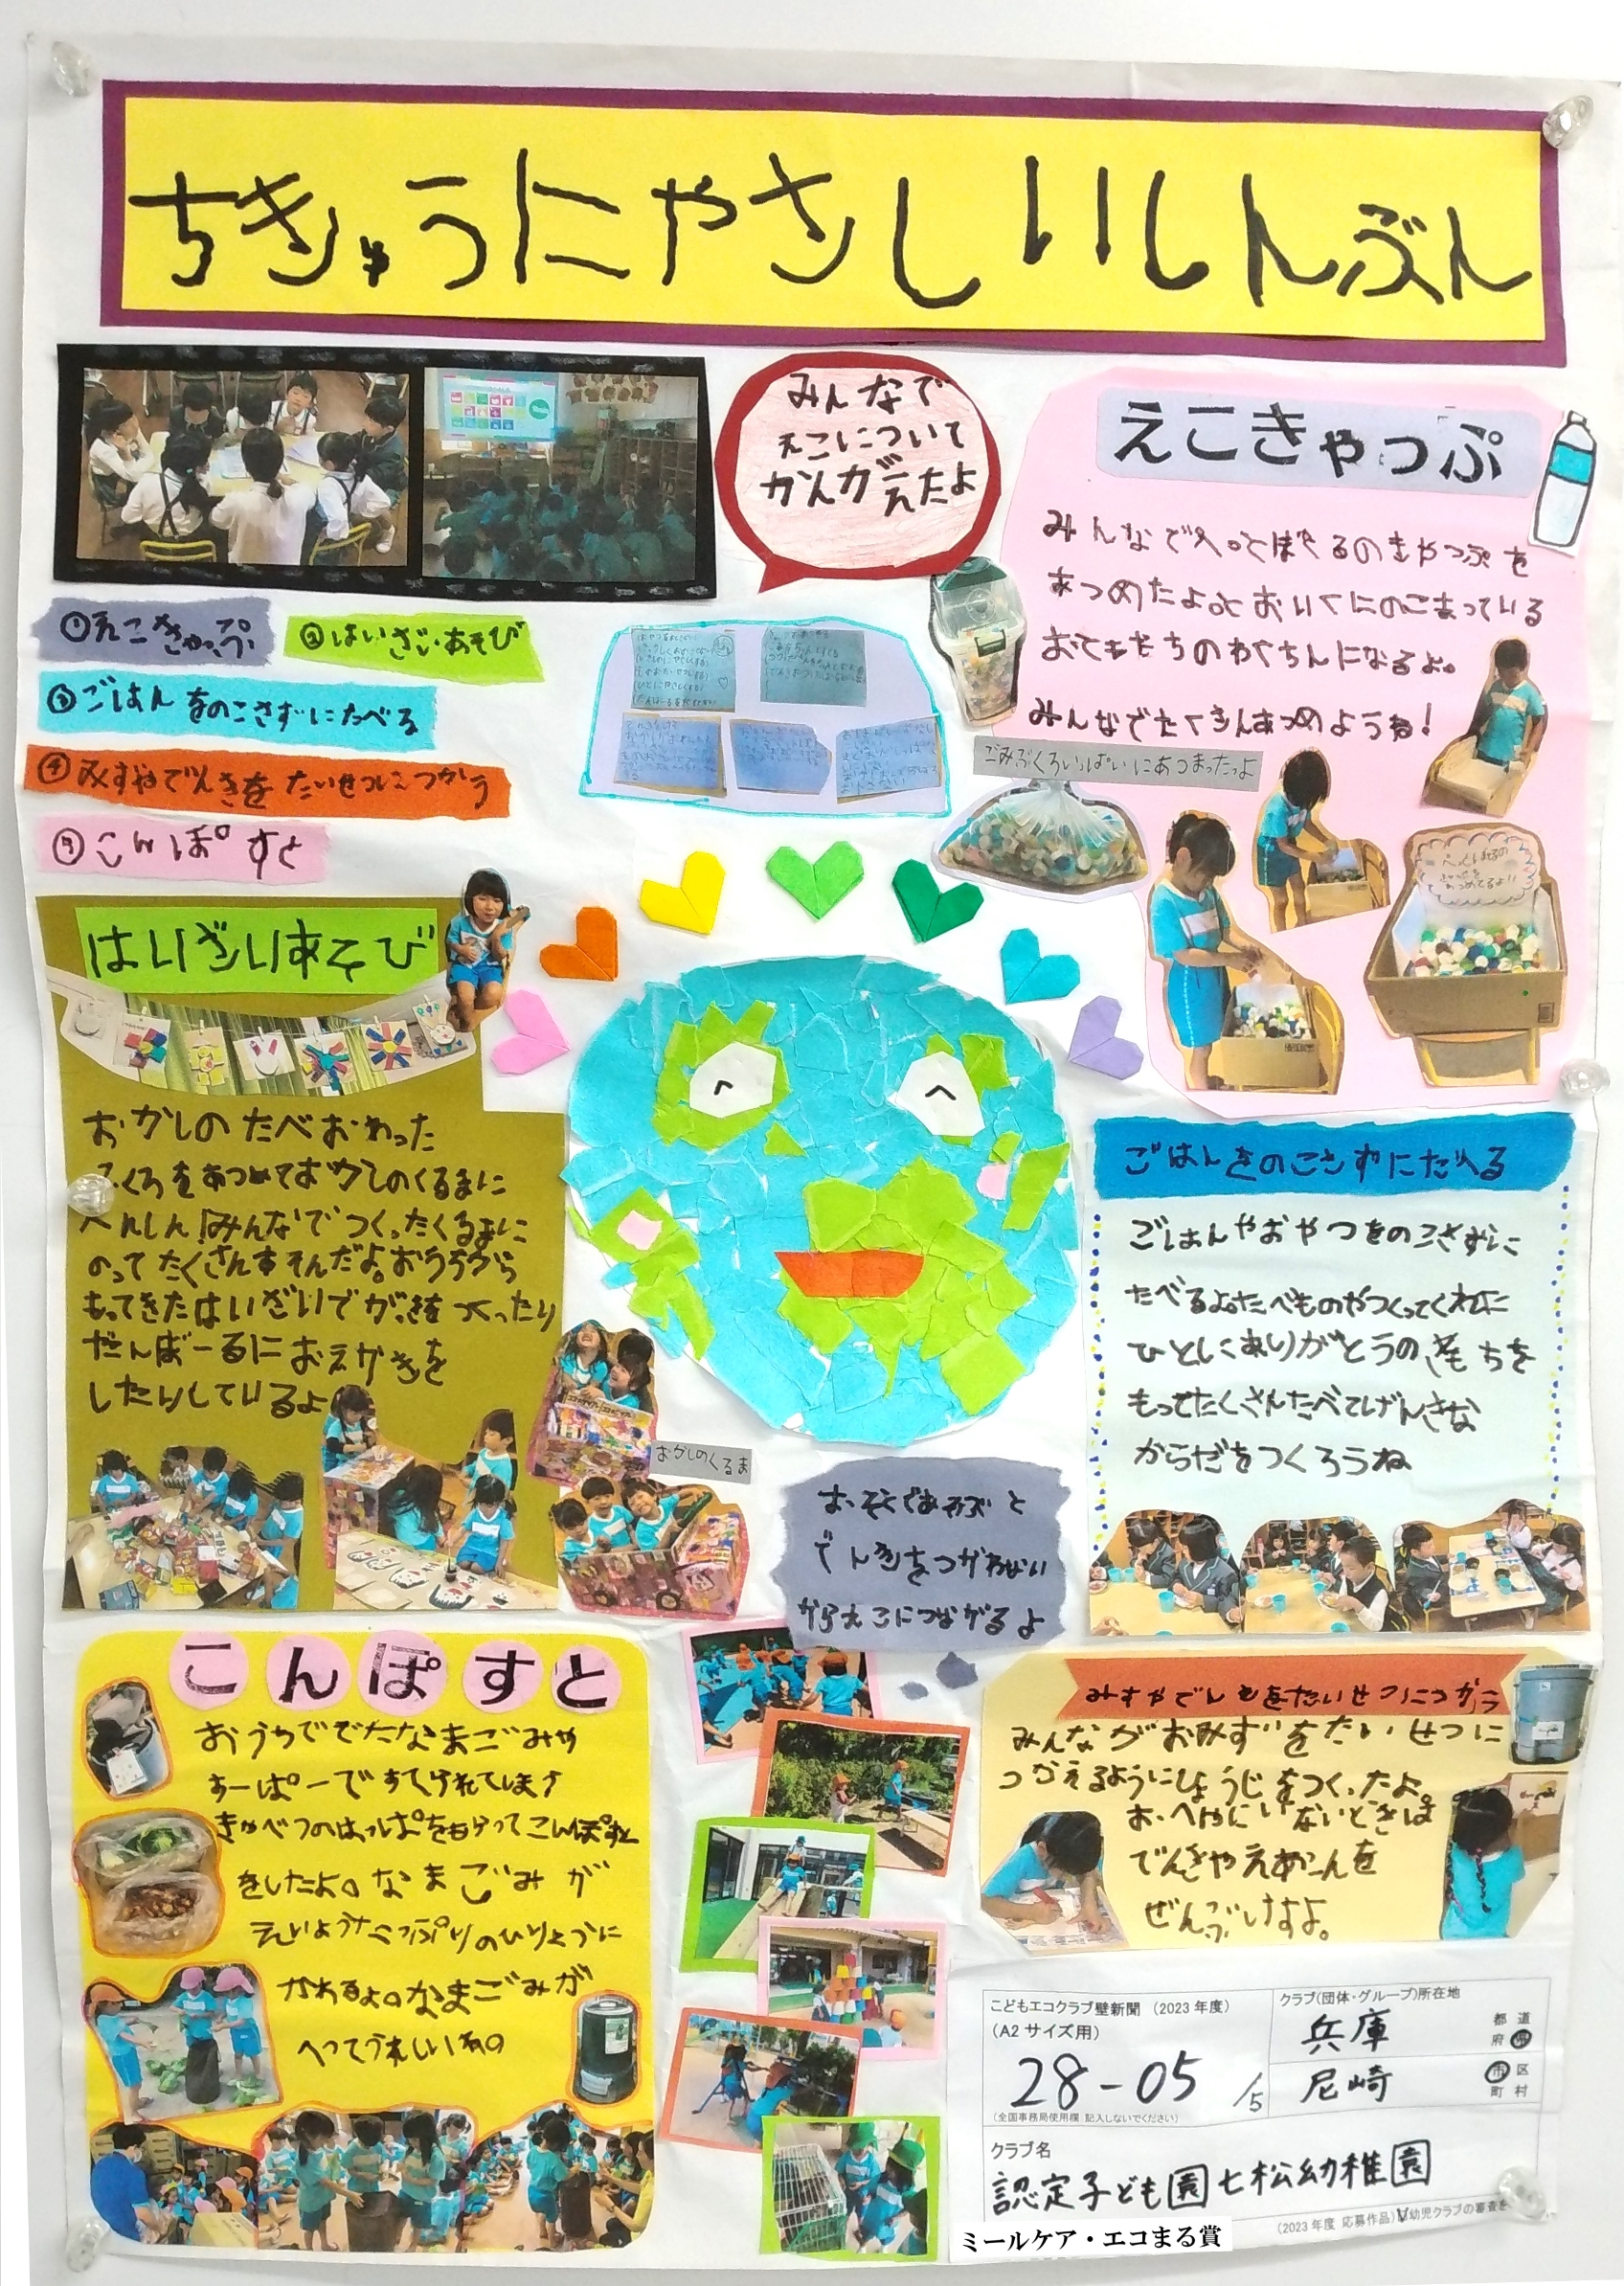 https://www.j-ecoclub.jp/topics/files/24-28-05meal.jpg